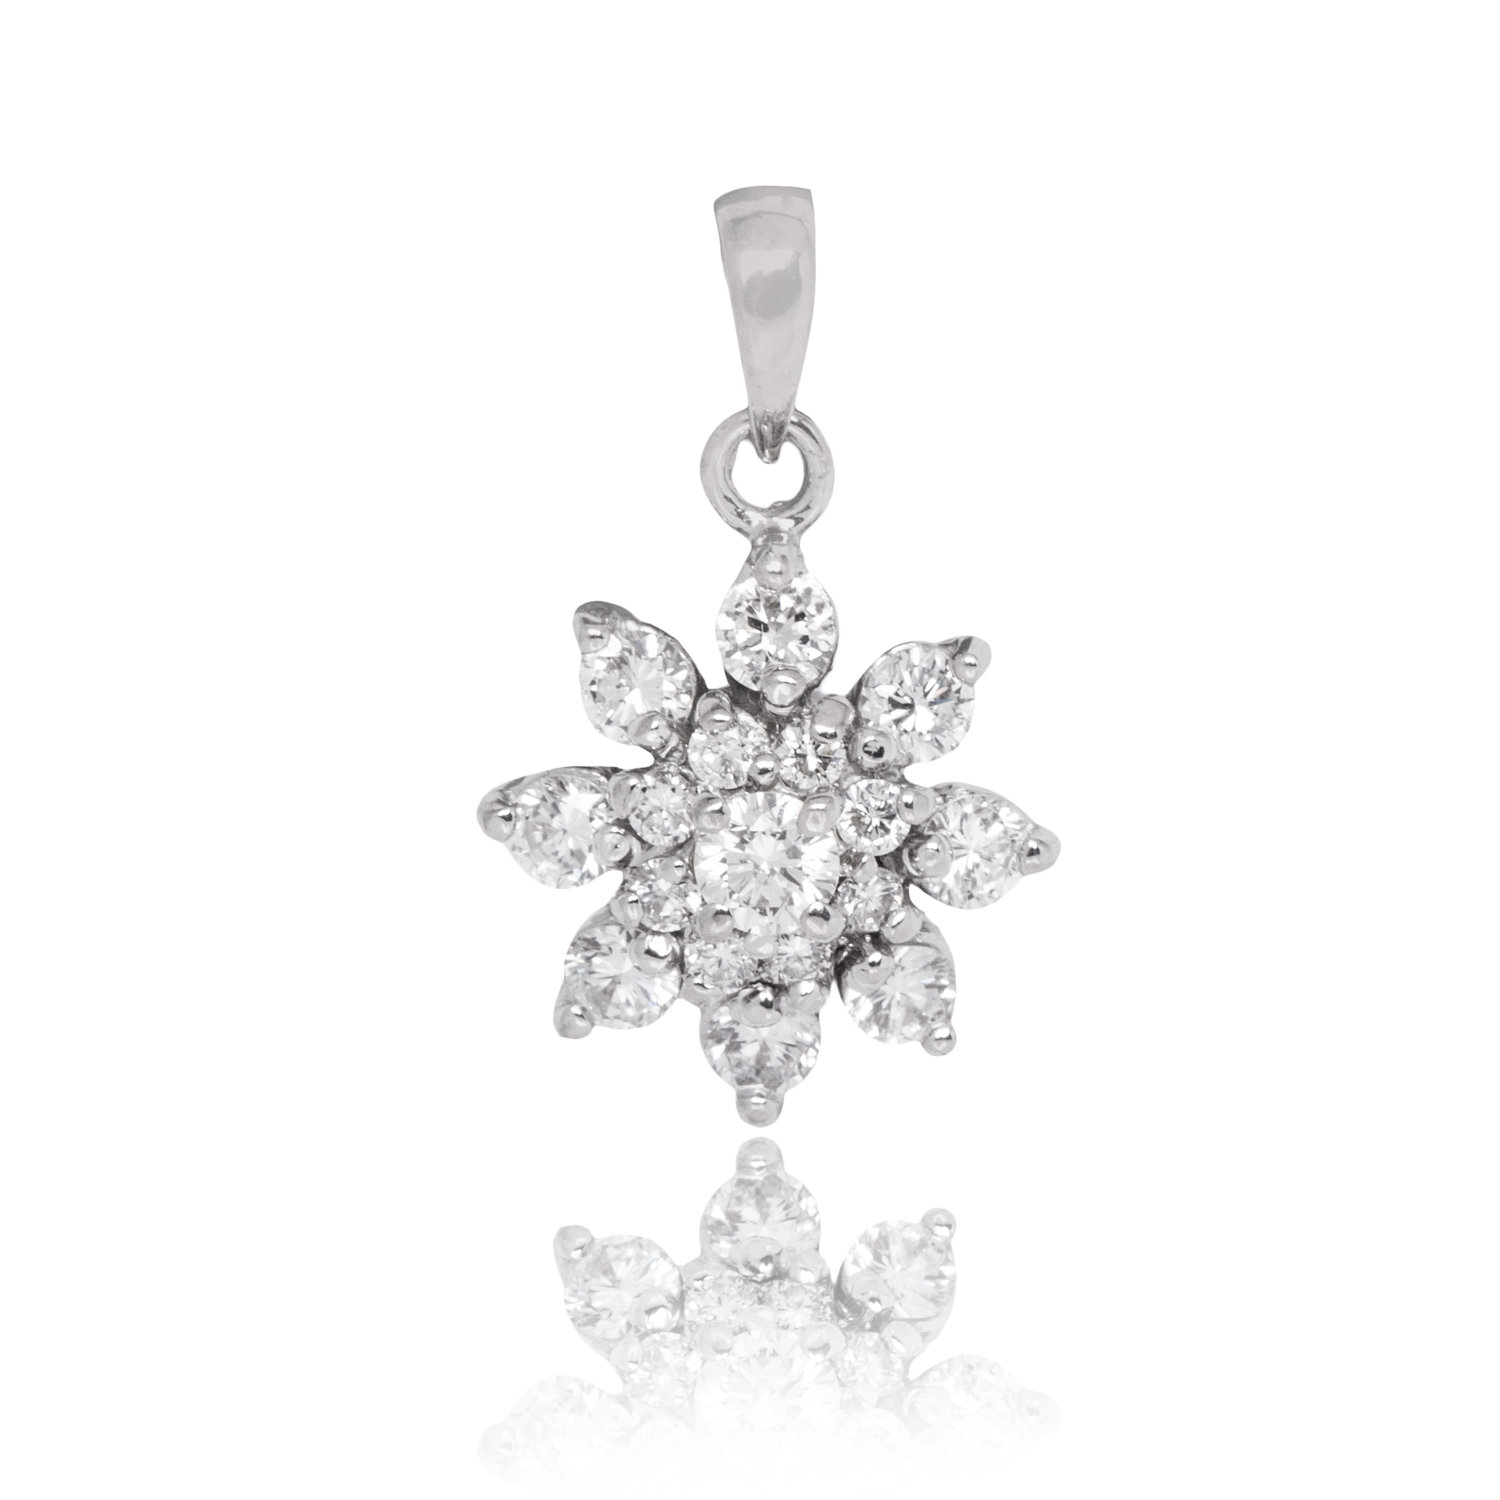 64-continental-jewels-manufacturers-pendant-cjp000064-18k-white-gold-vvs1-diamonds-customised-flower-pendant.jpg